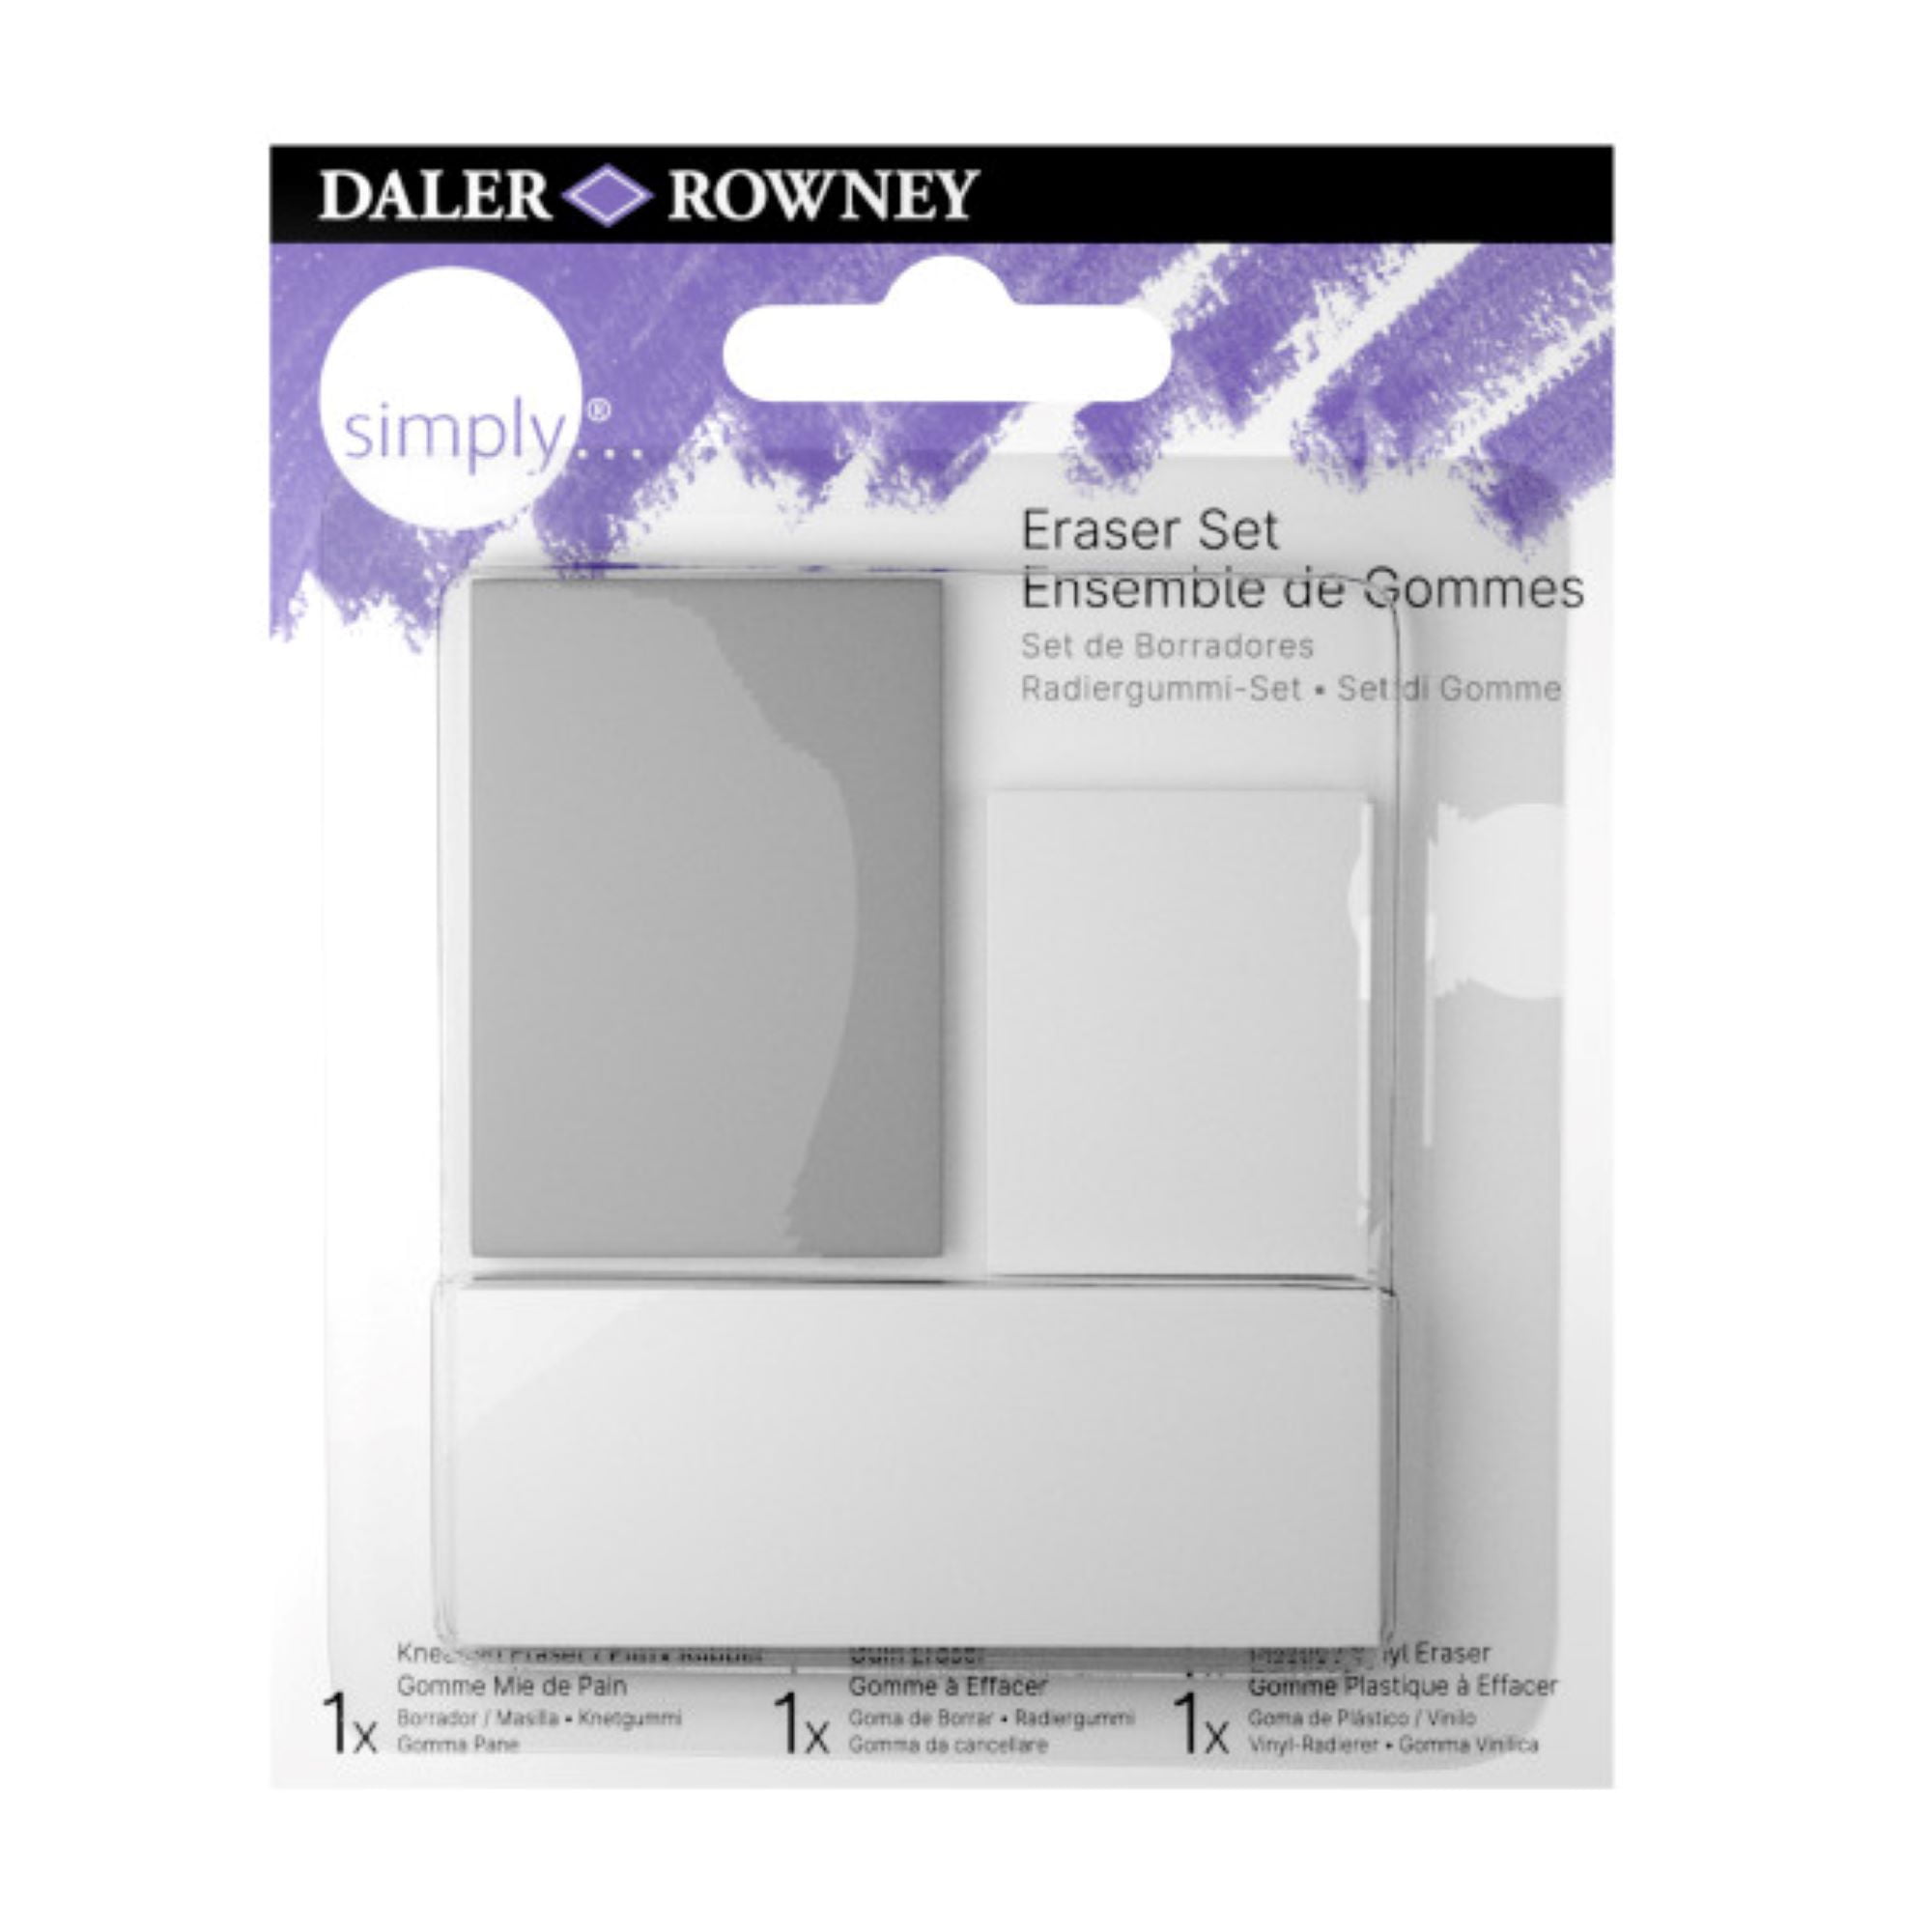 Daler-Rowney Simply Eraser Set, 3 Piece